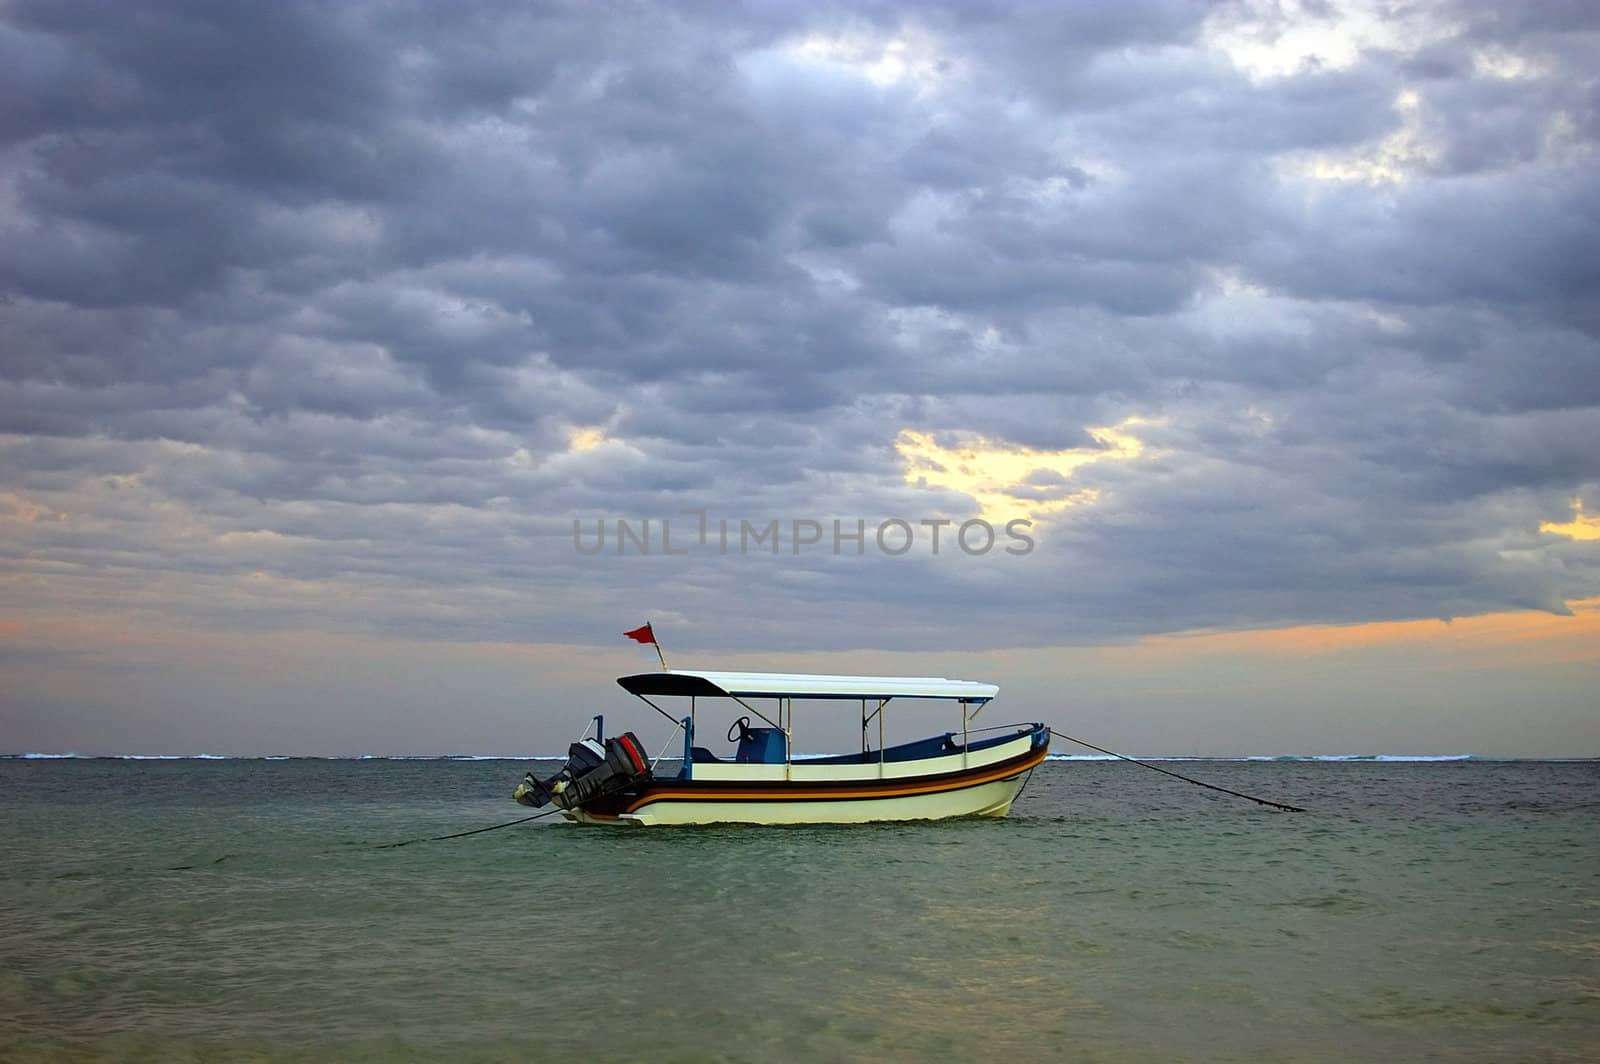 Boat anchored in the Indian ocean, Nusa Dua, Bali, Indonesia.